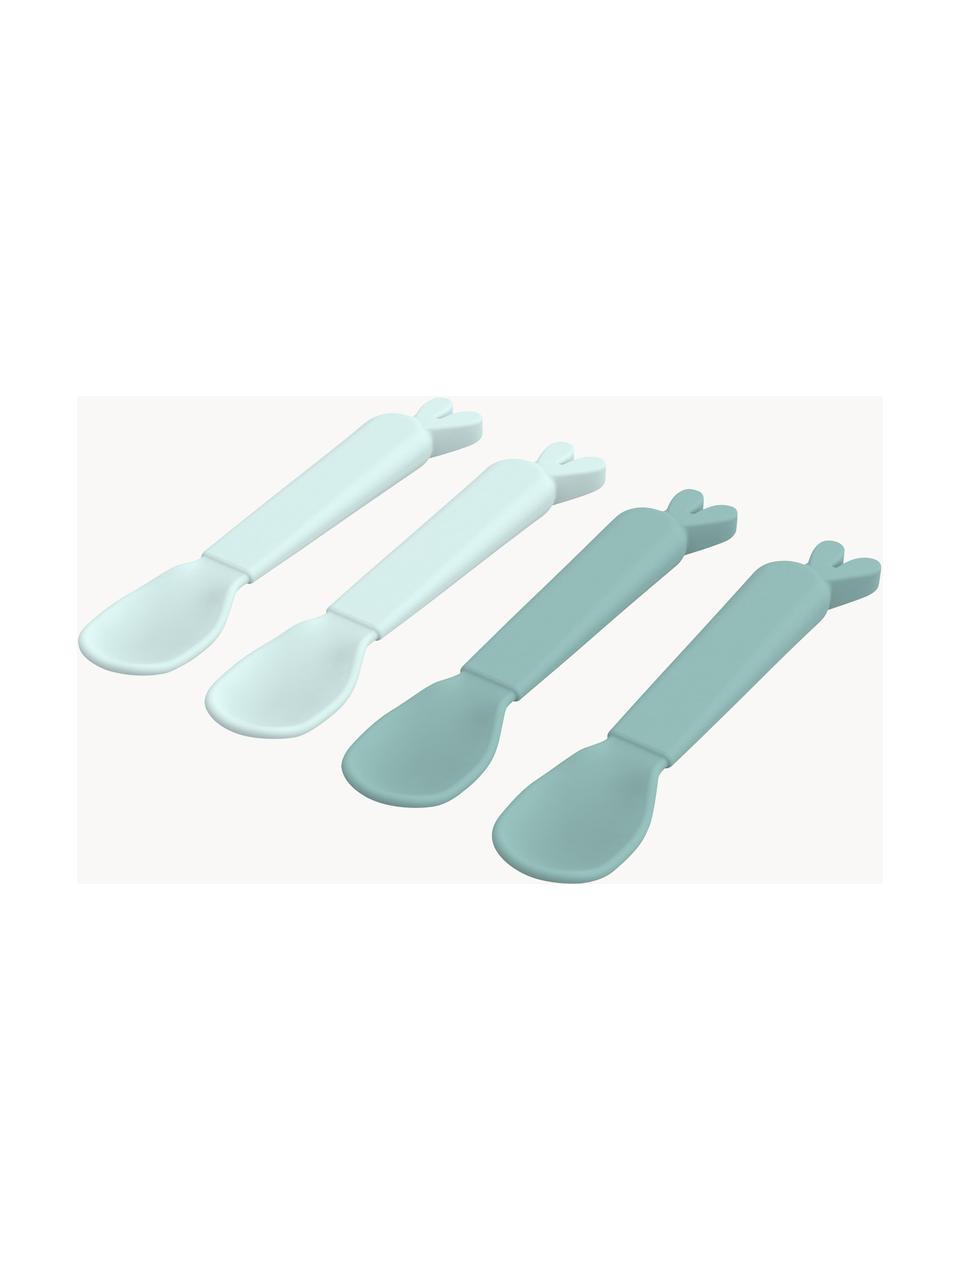 Set de cucharas Kiddish, 4 uds., Plástico, libre de BPA, Tonos azules, L 13 cm